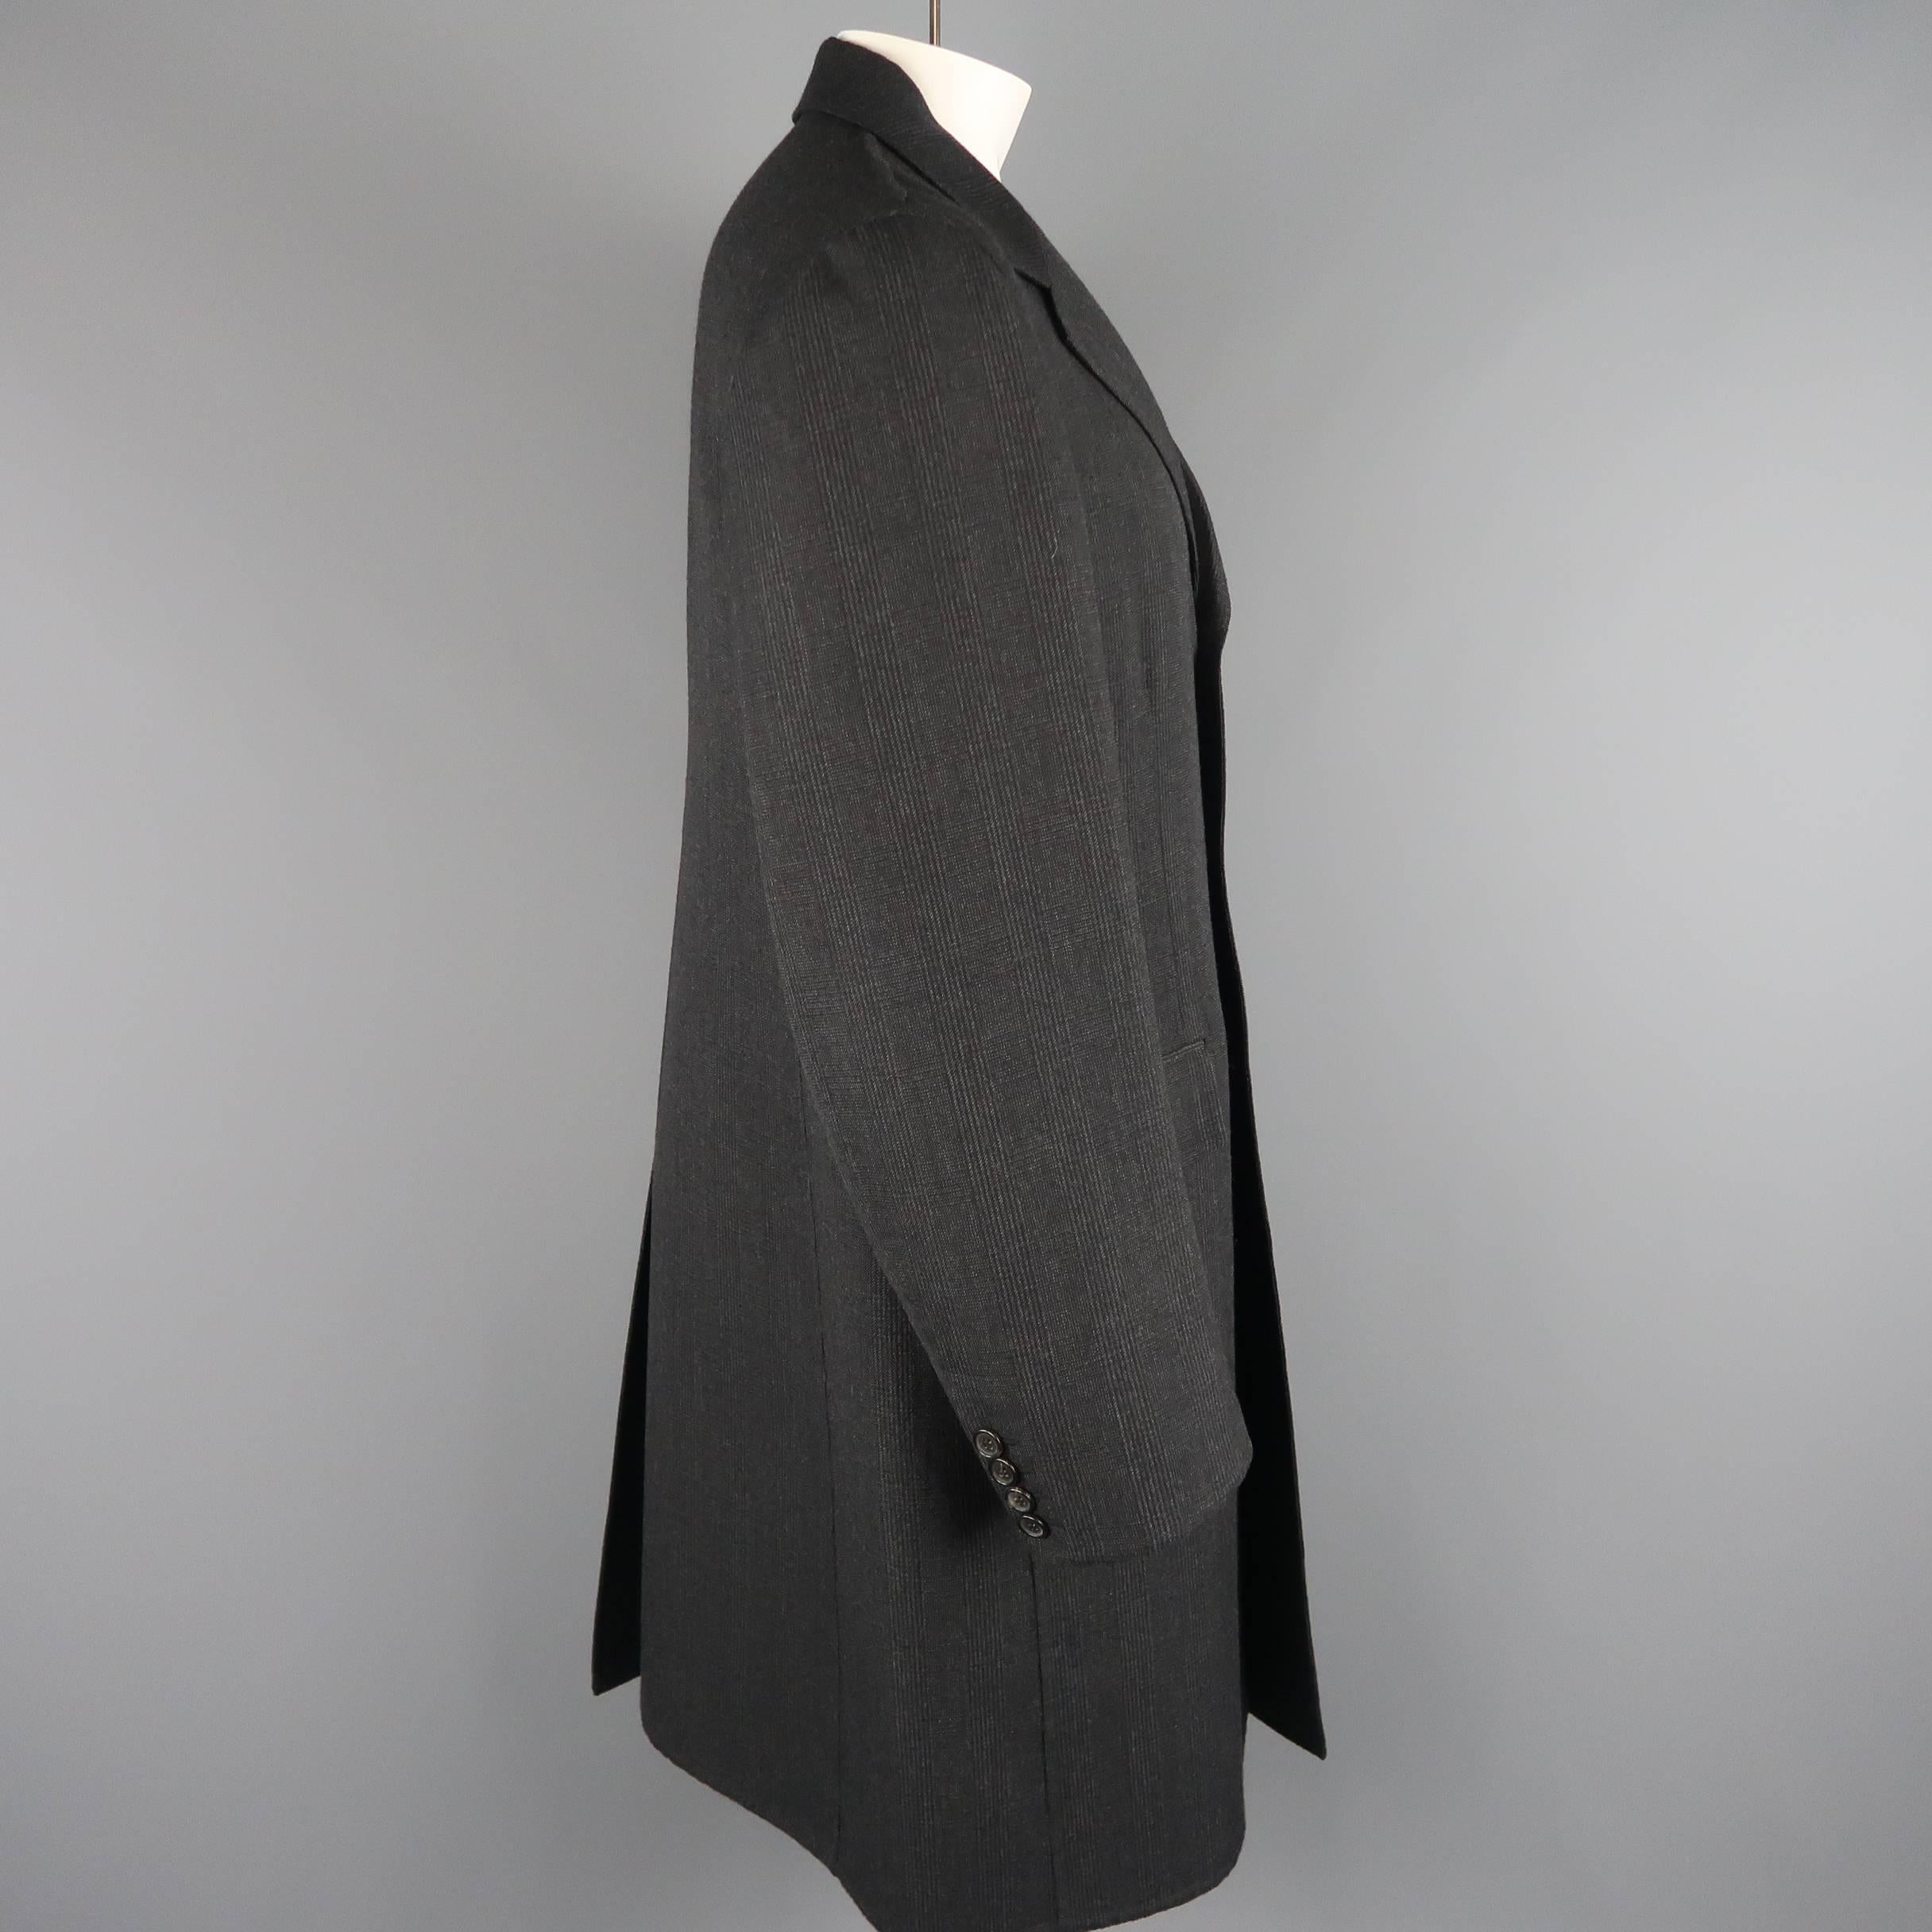 Black PRADA 46 Charcoal Glenplaid Wool Notch Lapel overcoat Coat Jacket